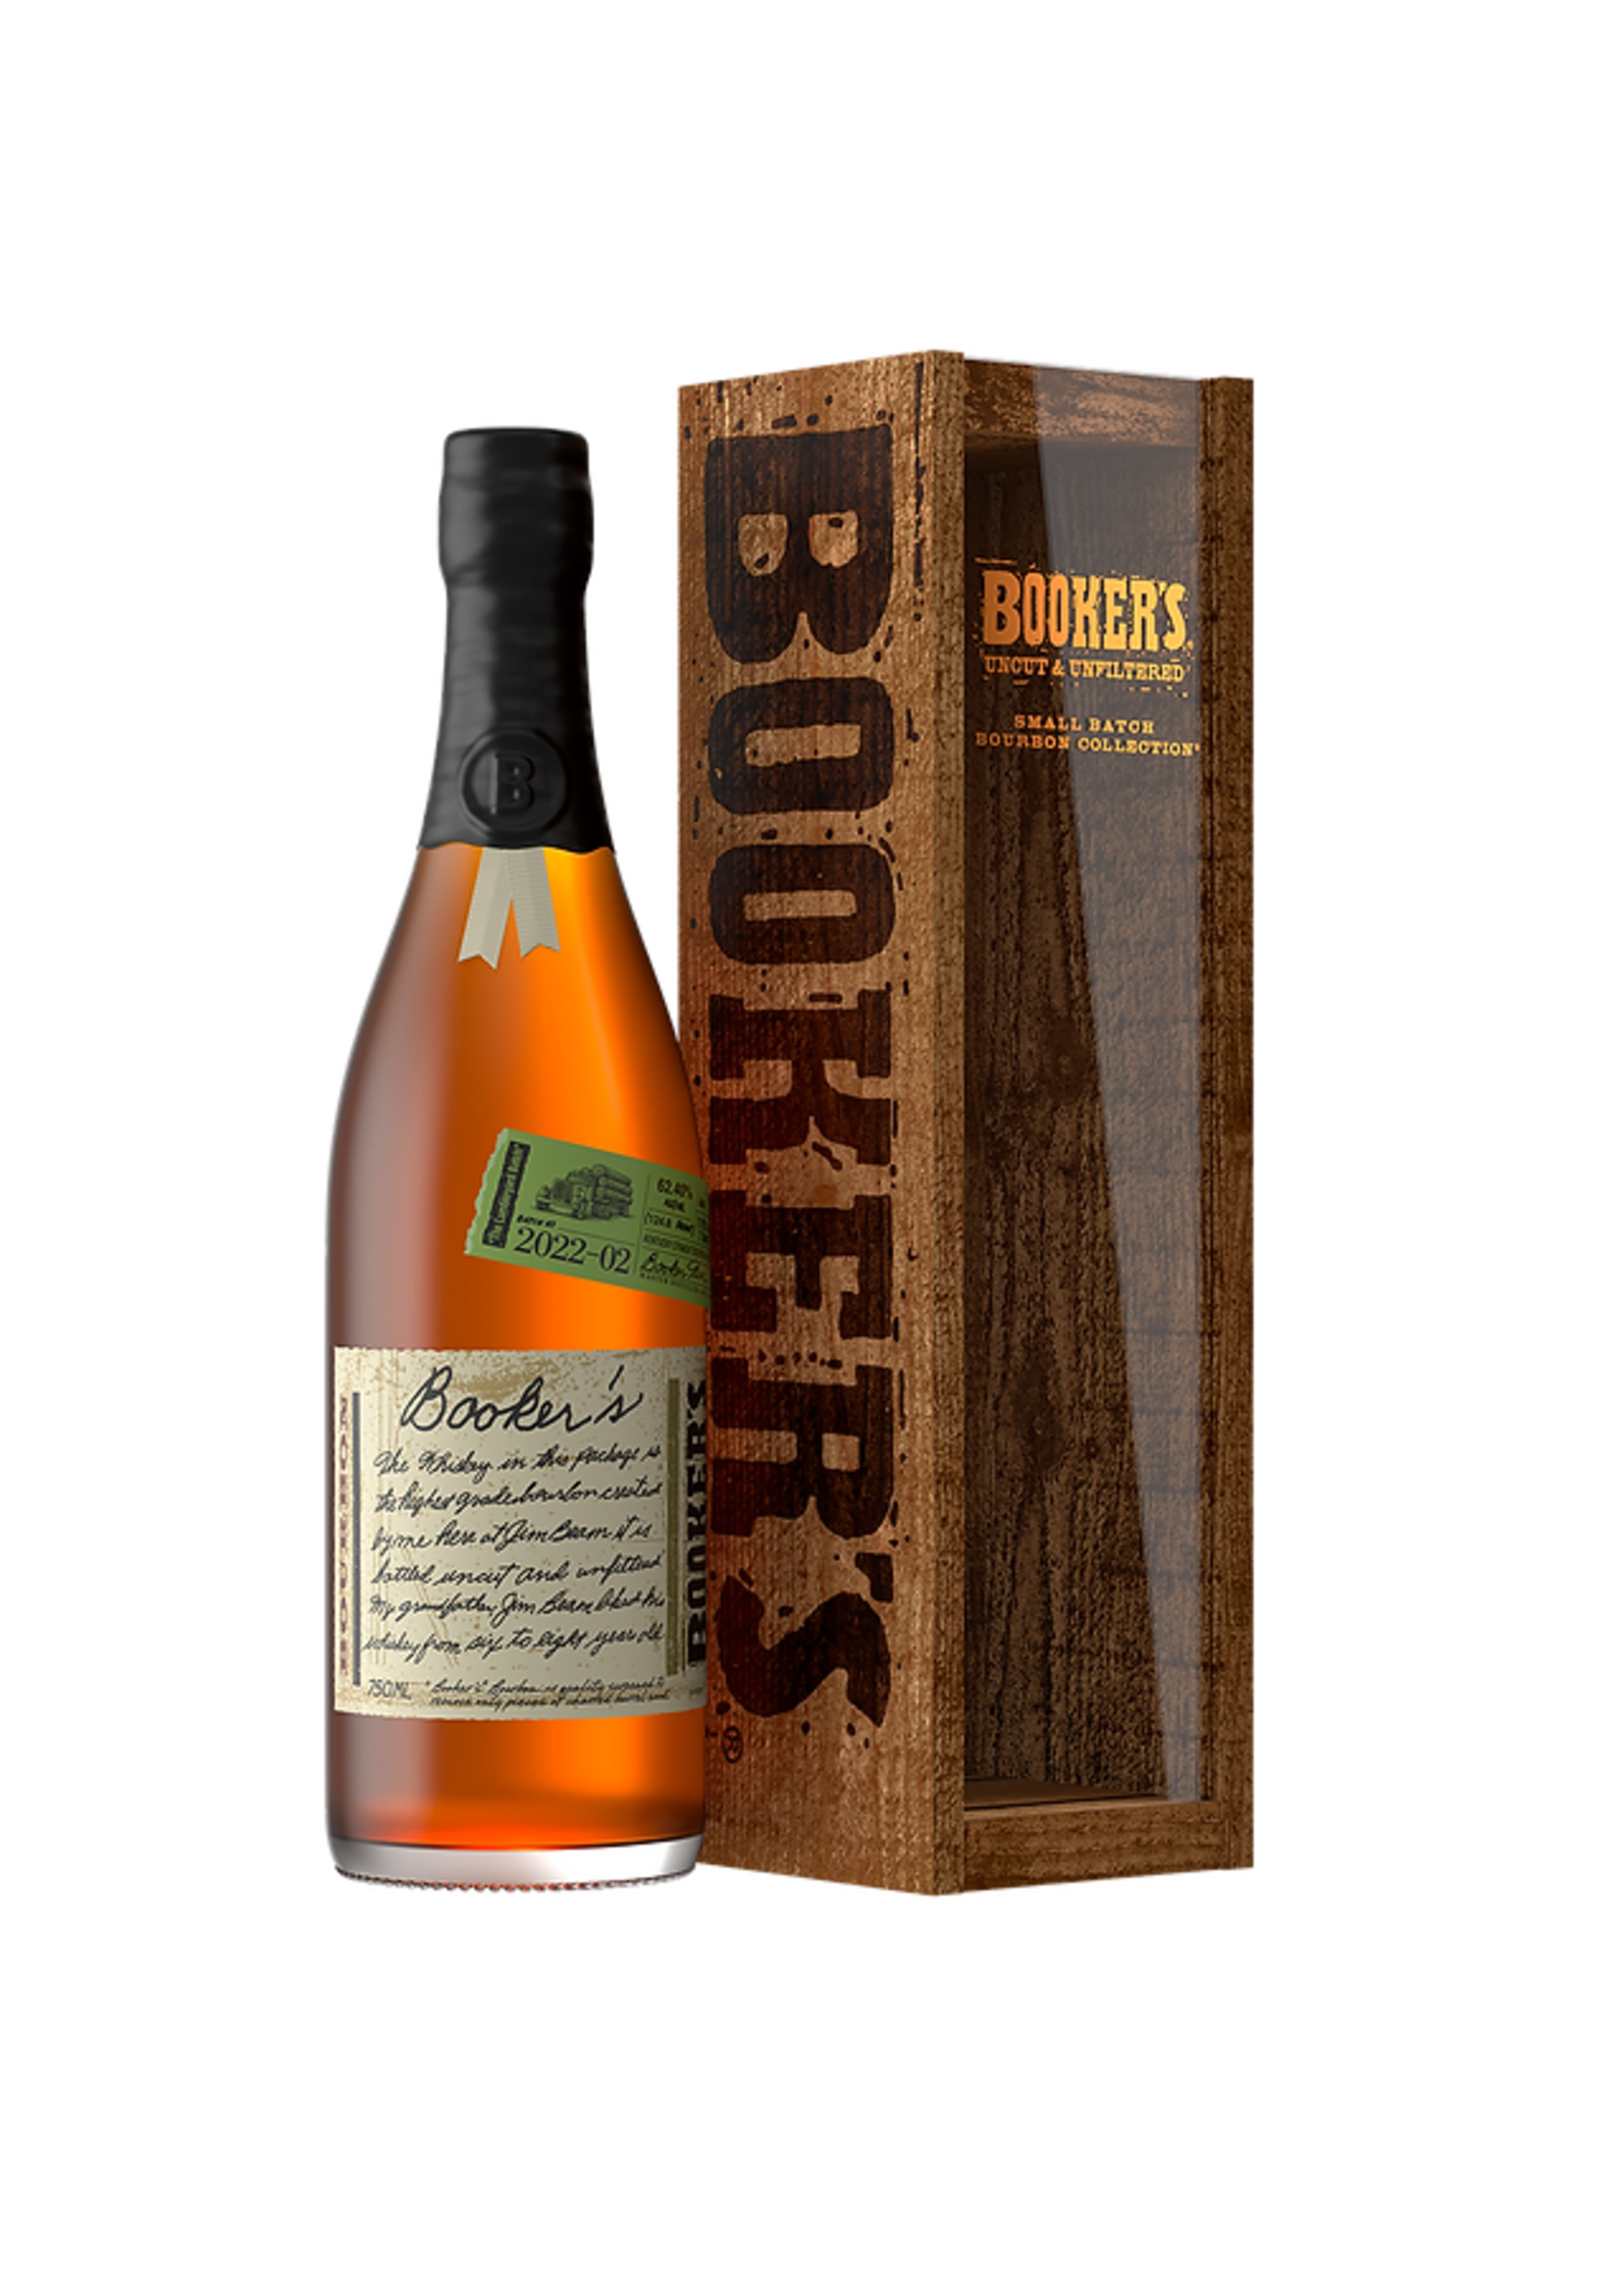 Bookers Bourbon Mighty Fine Batch 750ml